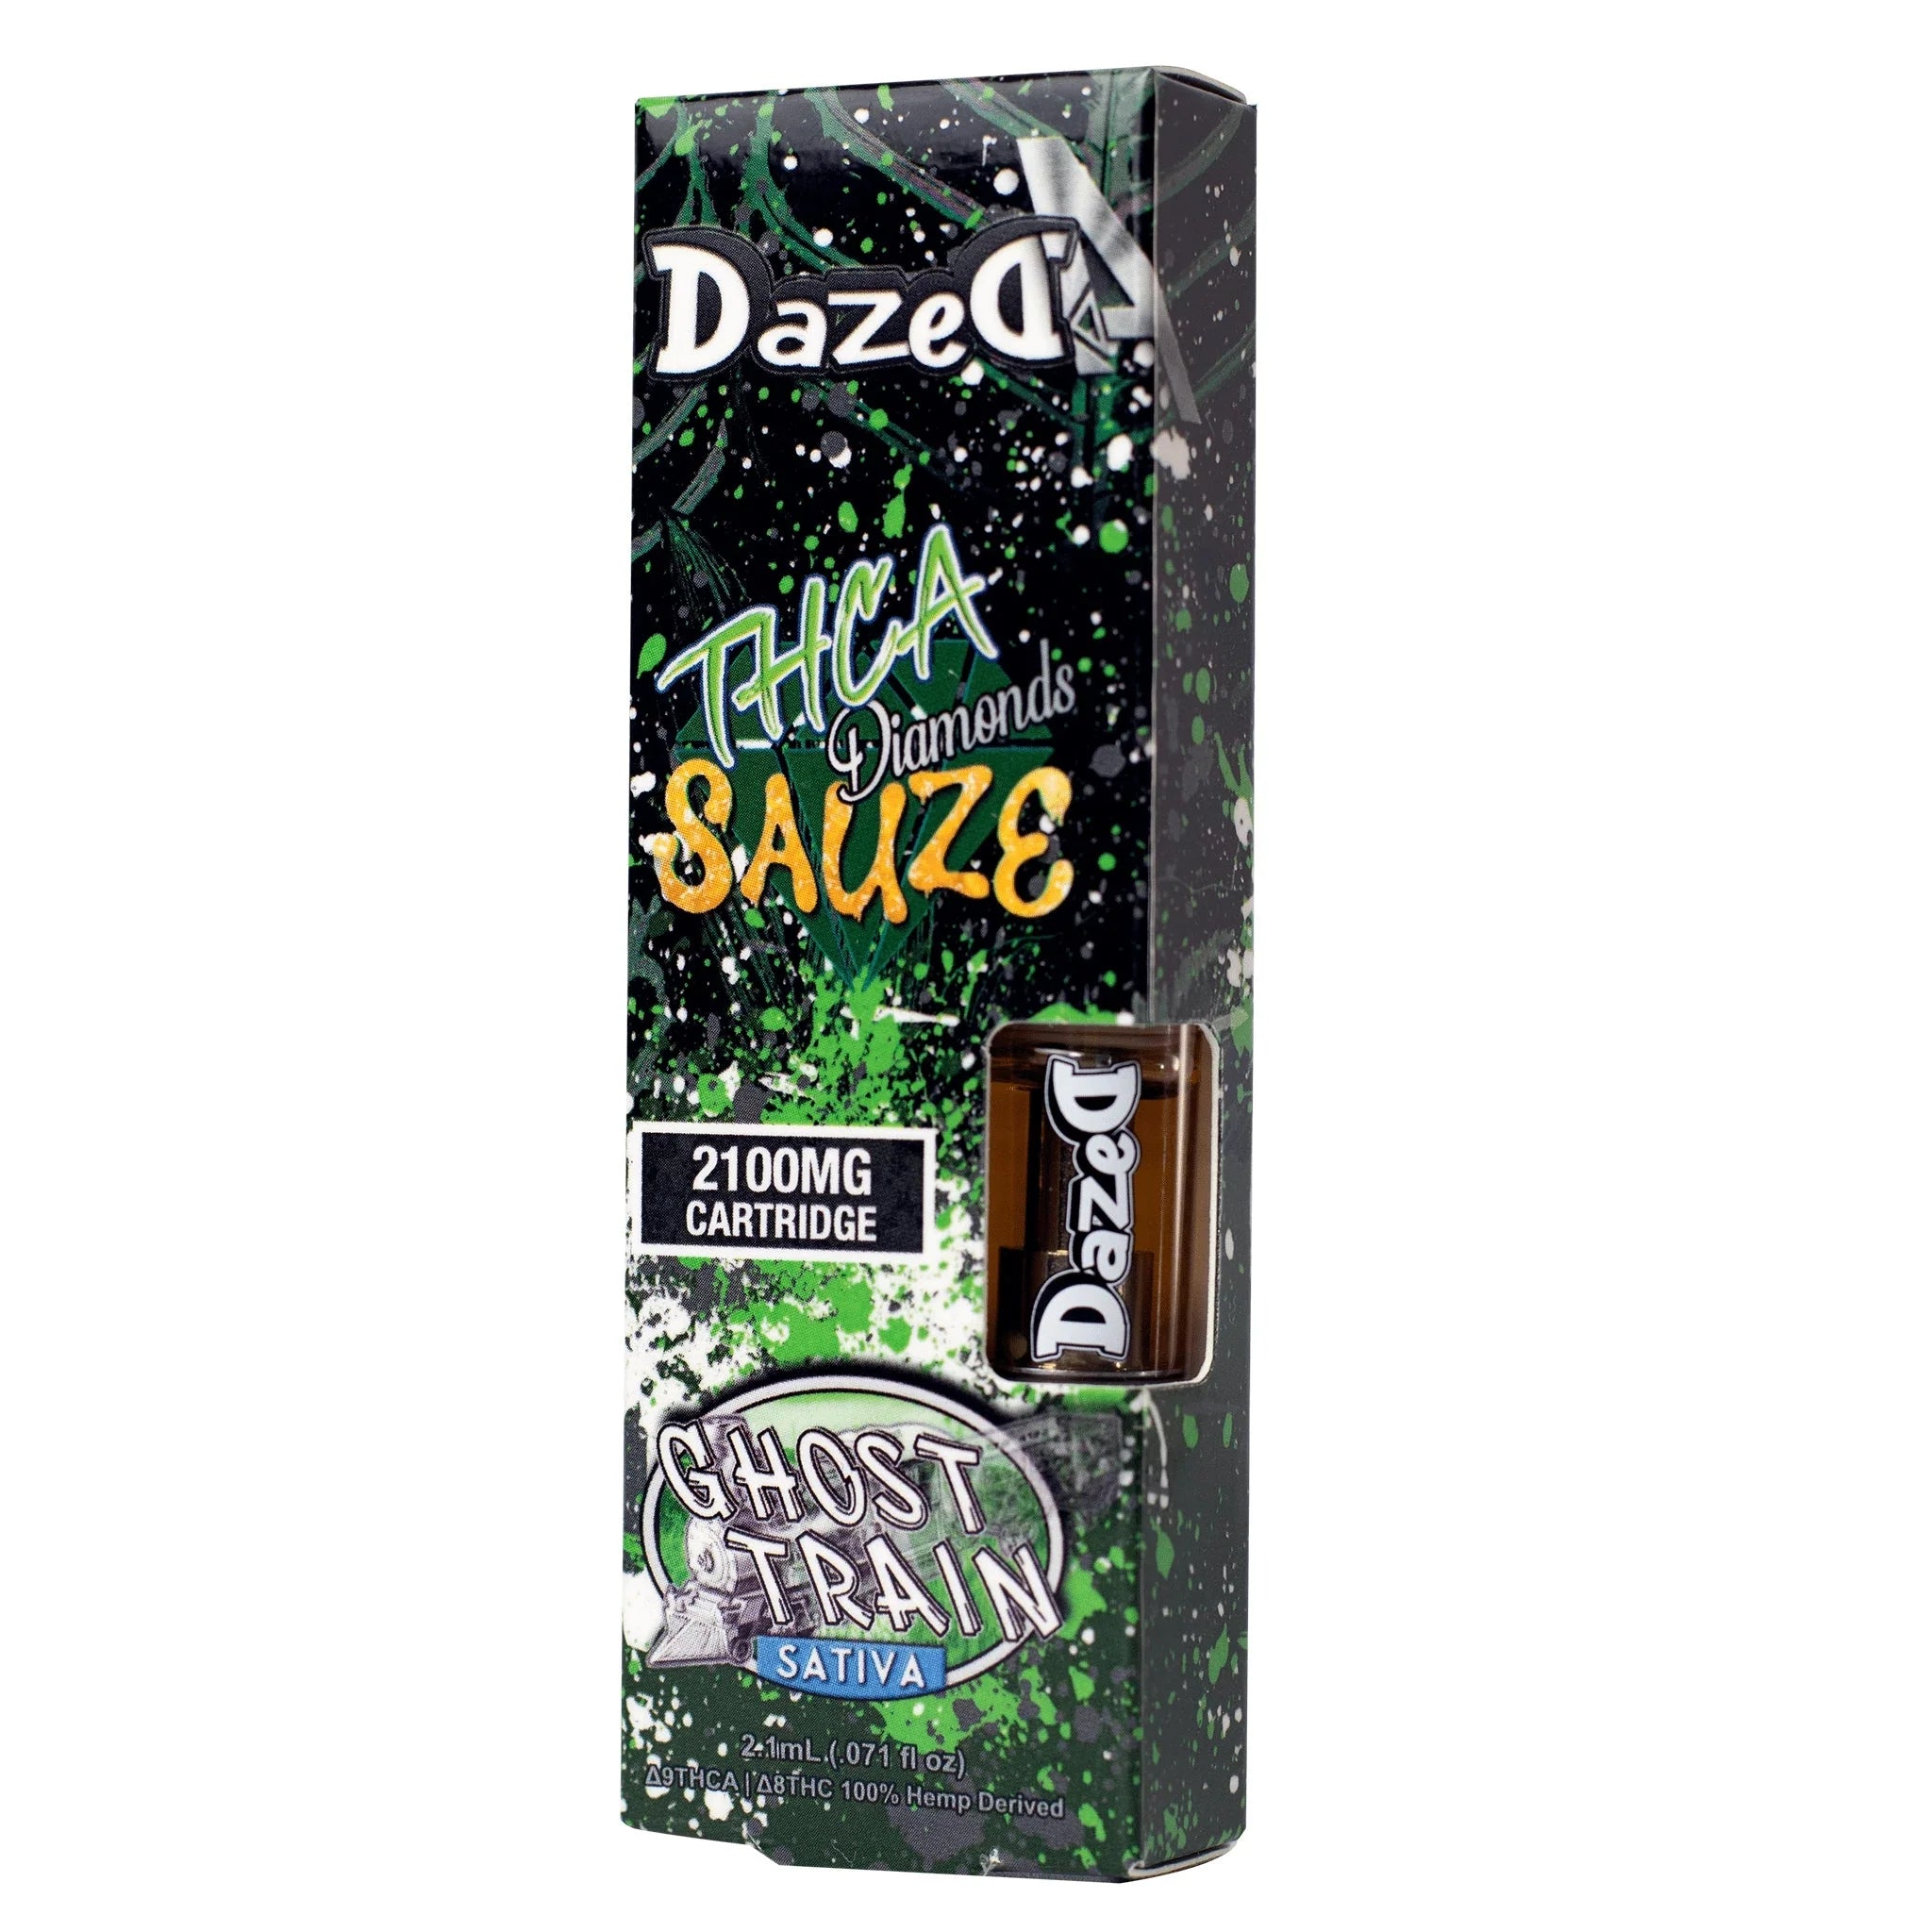 DazedA THCA Diamonds Sauze Cartridges (2.1g) Best Price